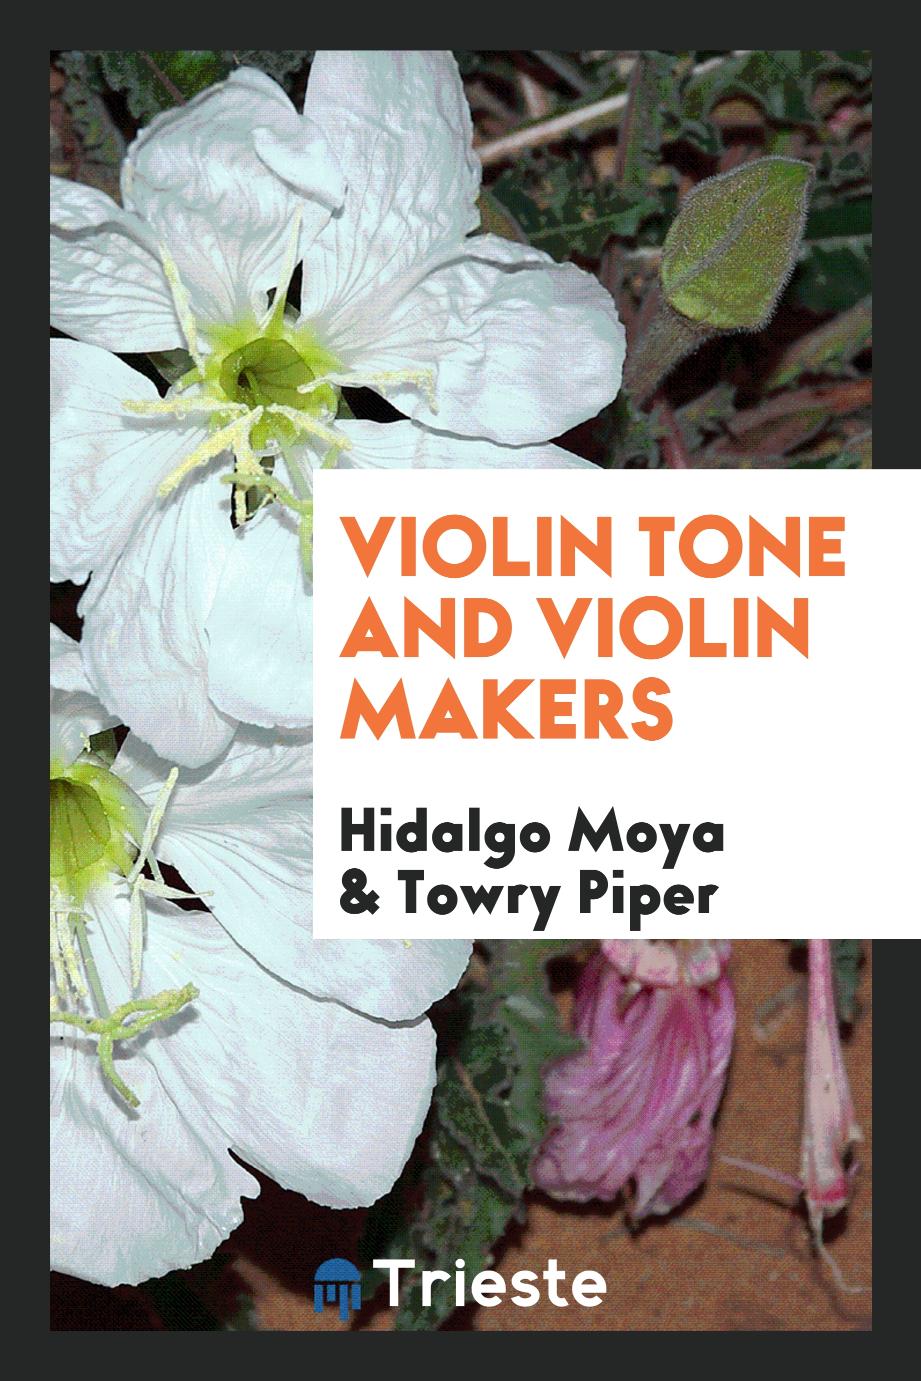 Violin Tone and Violin Makers